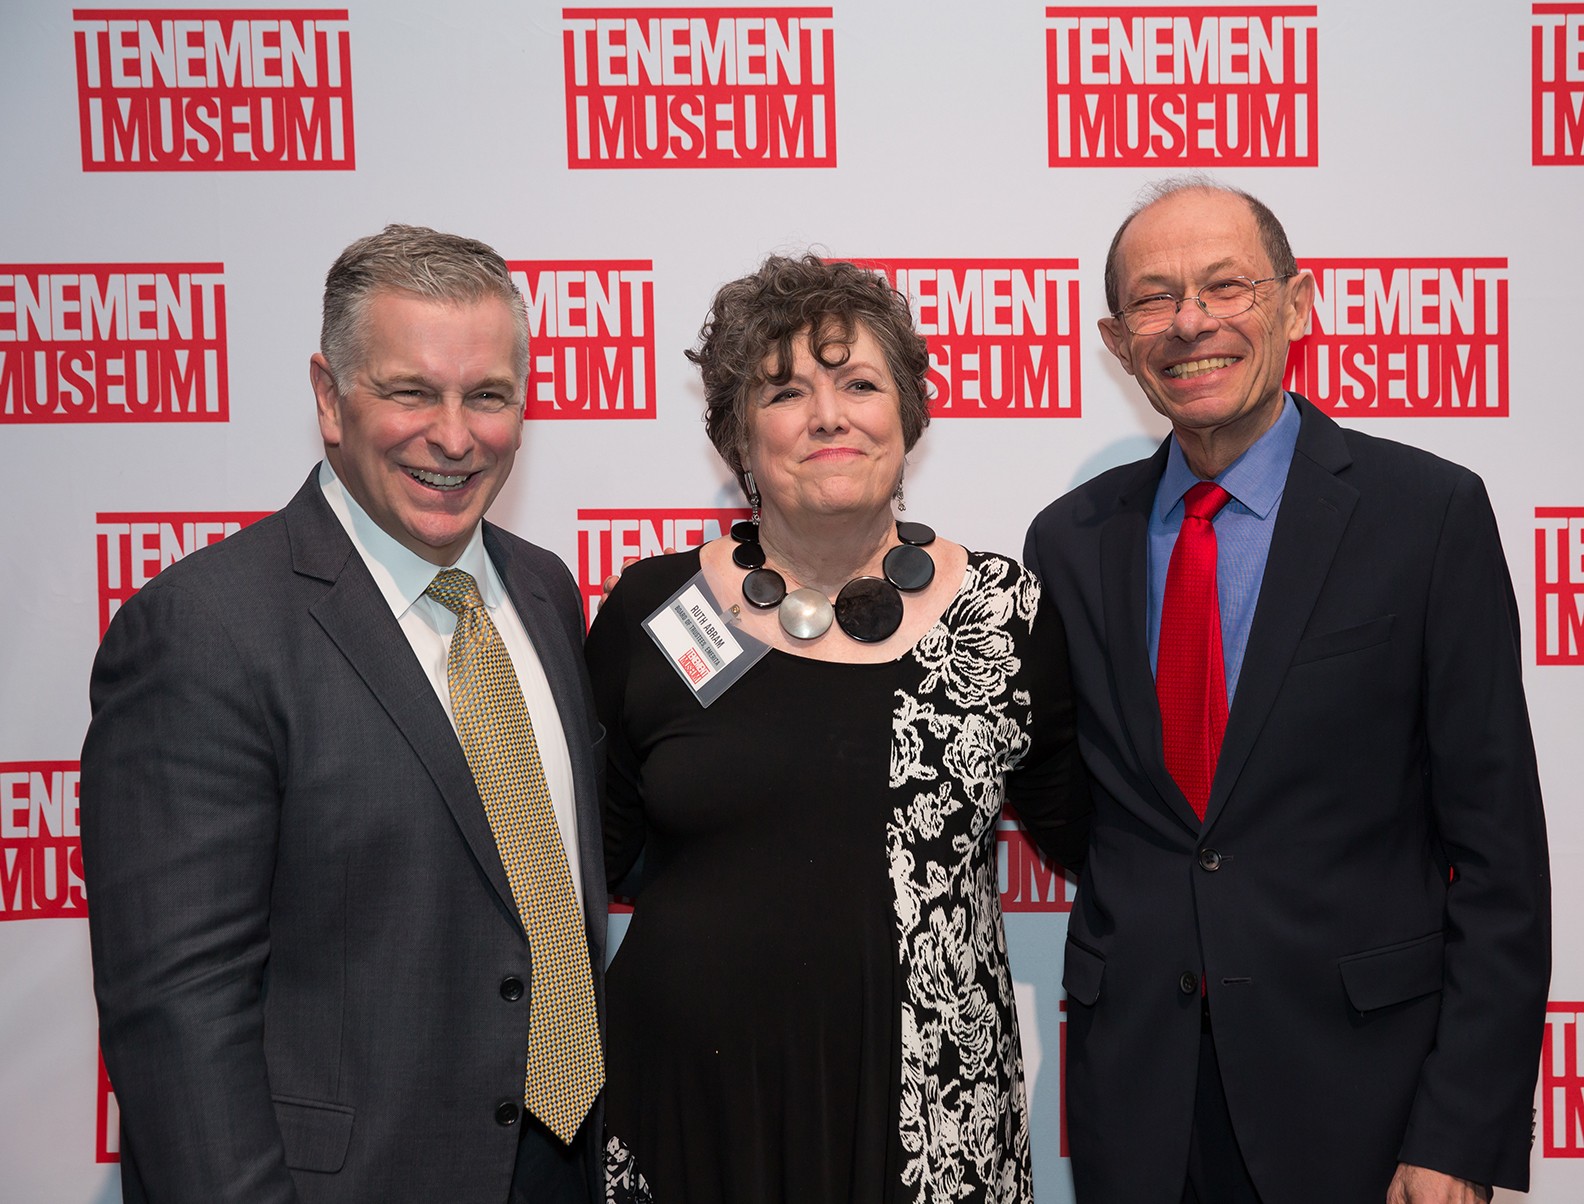 3 former Tenement Museum presidents: Ruth Abram, Morris J. Vogel & Kevin Jennings together at the 2018 Gala